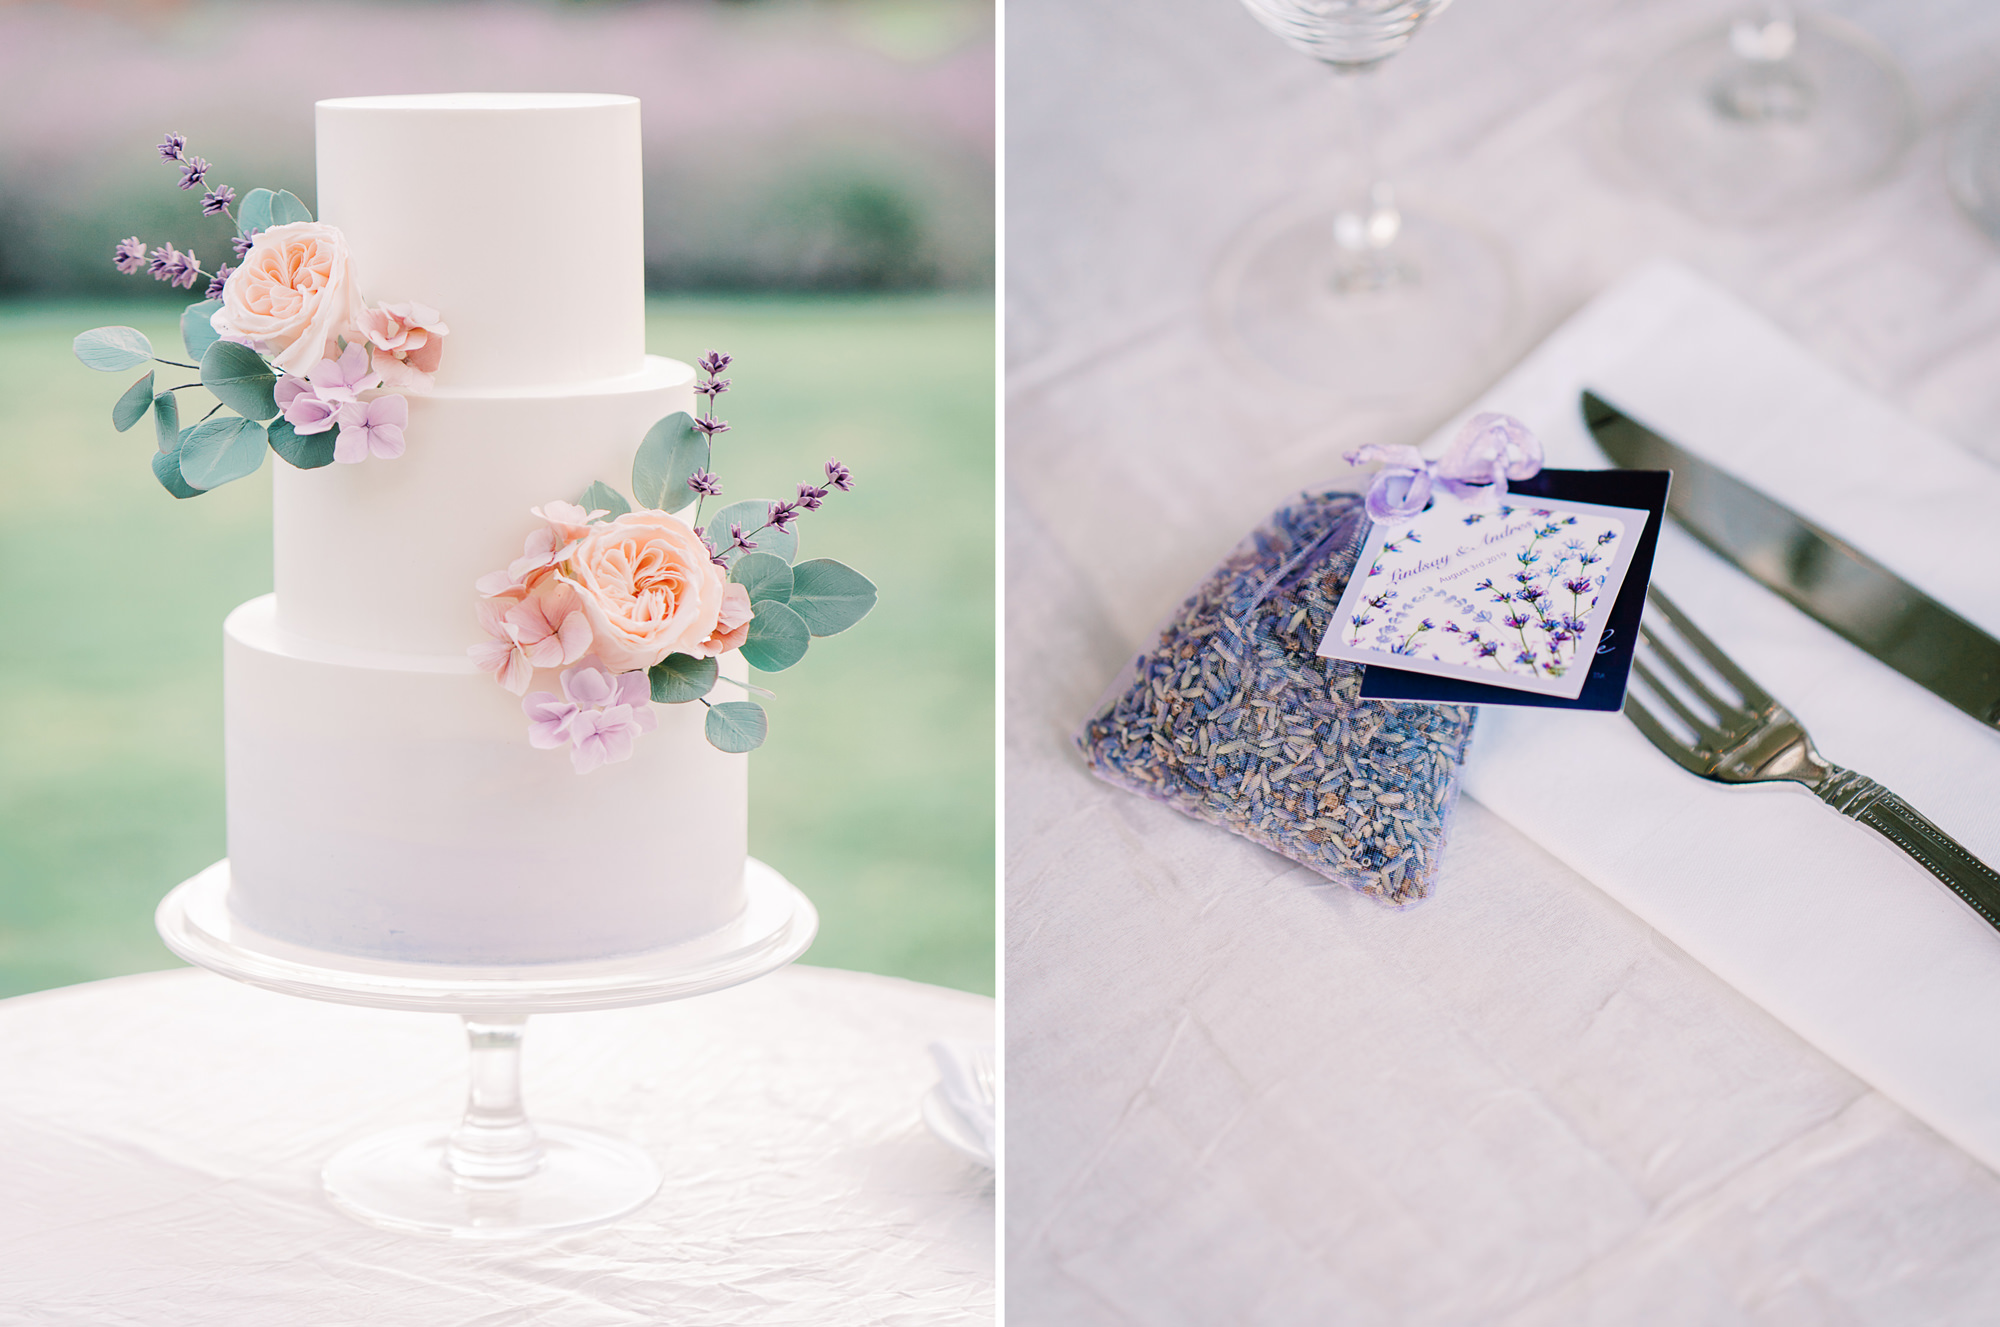 Wedding cakes from Honeycrumb Cake Studio